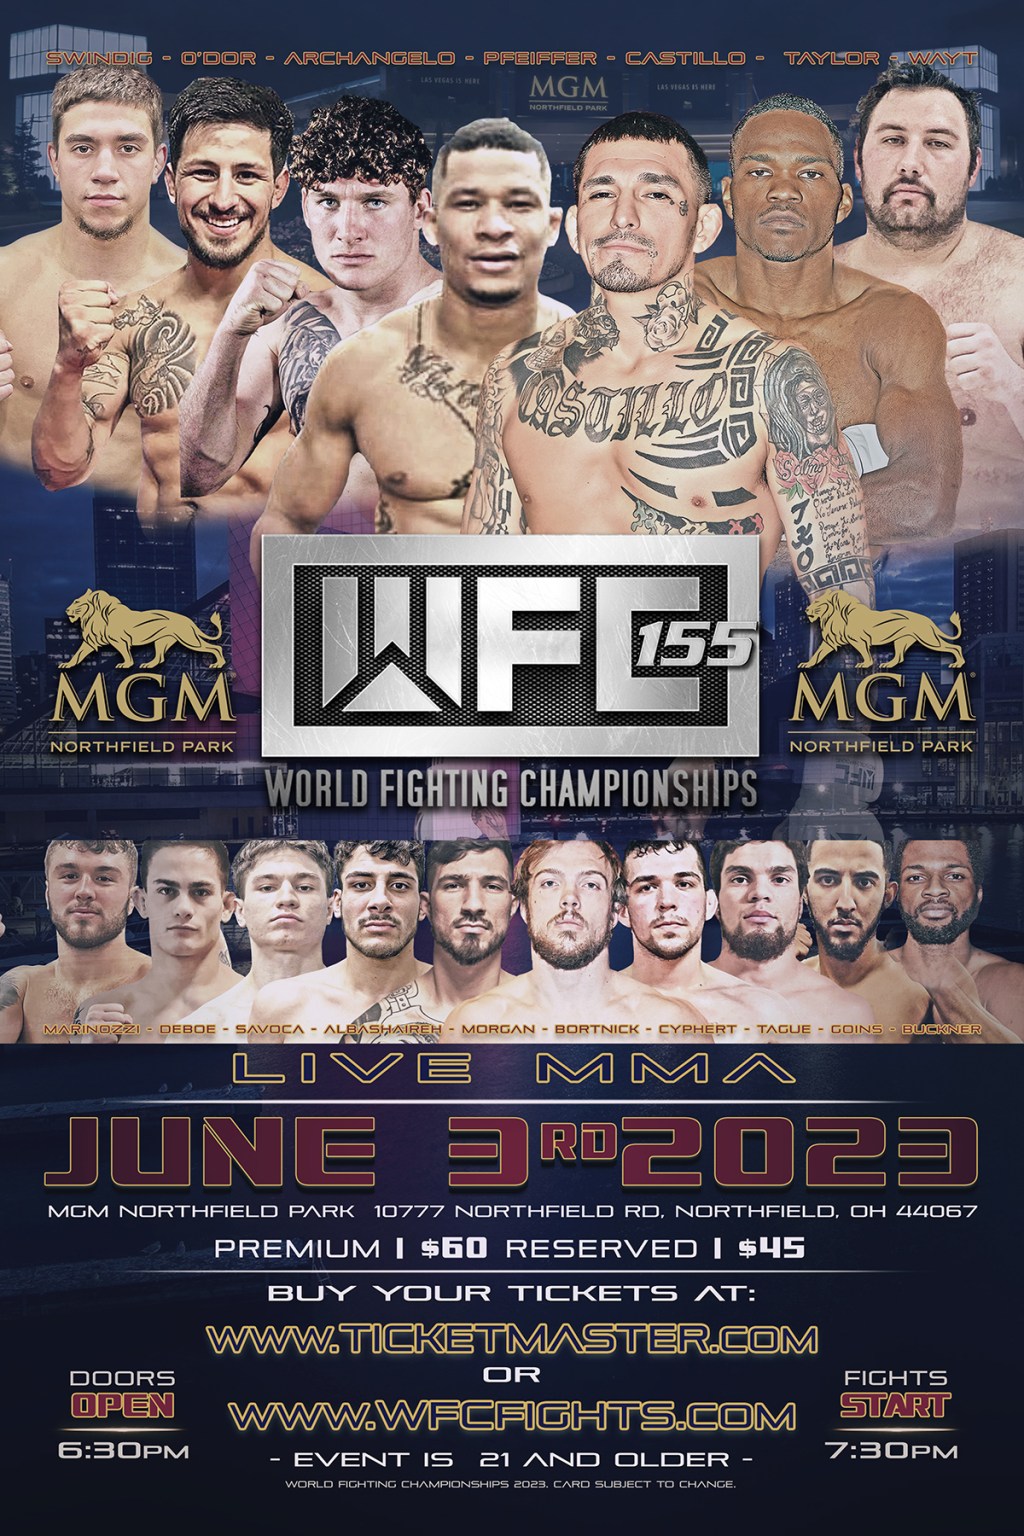 WFC  LIVE MMAJune rd,202 at MGM Northfield Park – World